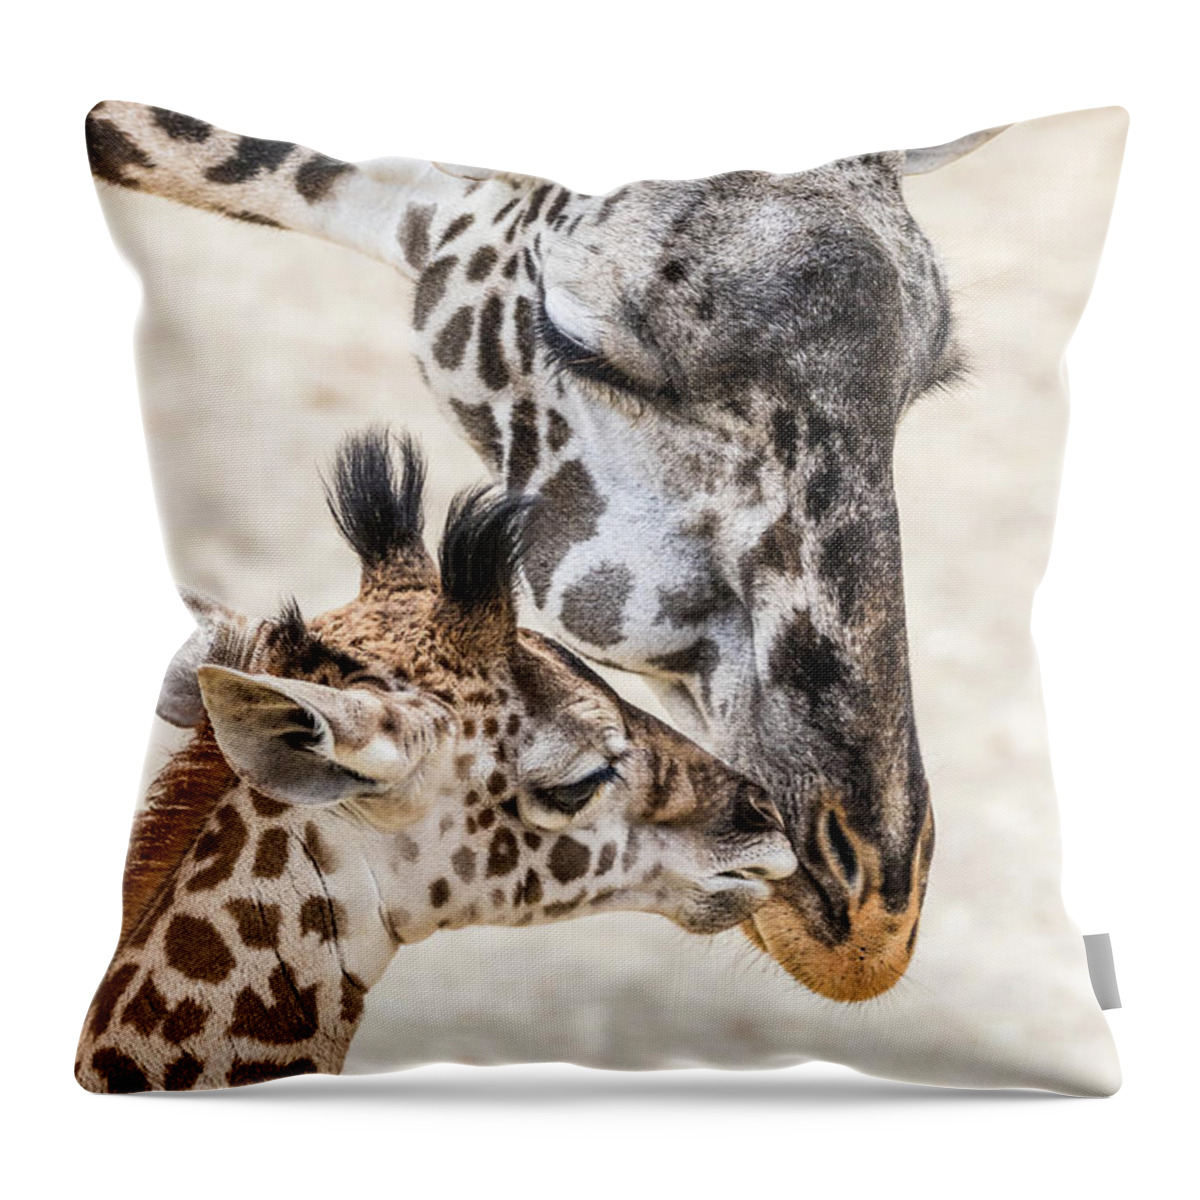 Giraffe Throw Pillow featuring the photograph Mother's Love by Jim Miller